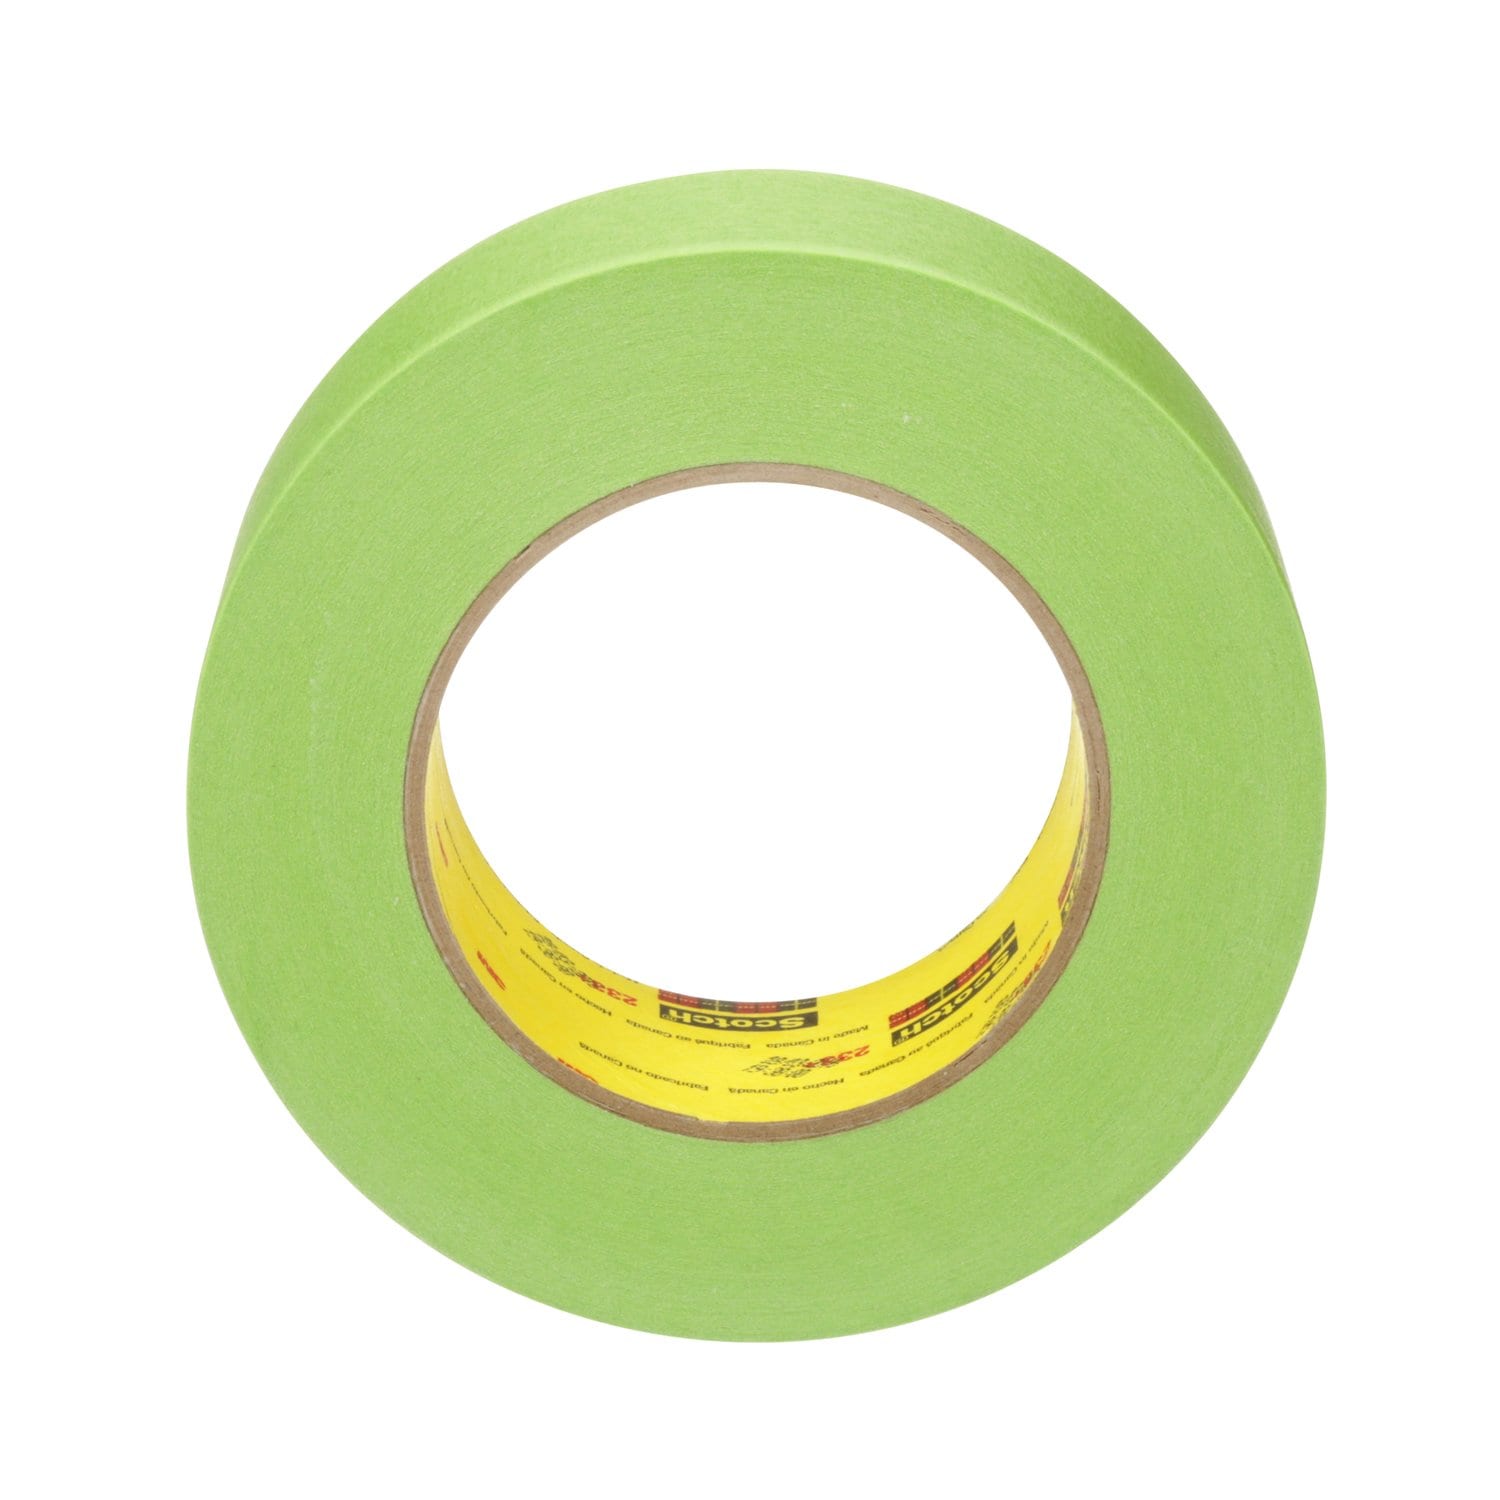 7000048805 - Scotch Performance Masking Tape 233+ 26340, Green, 48 mm x 55 m, 12/Case